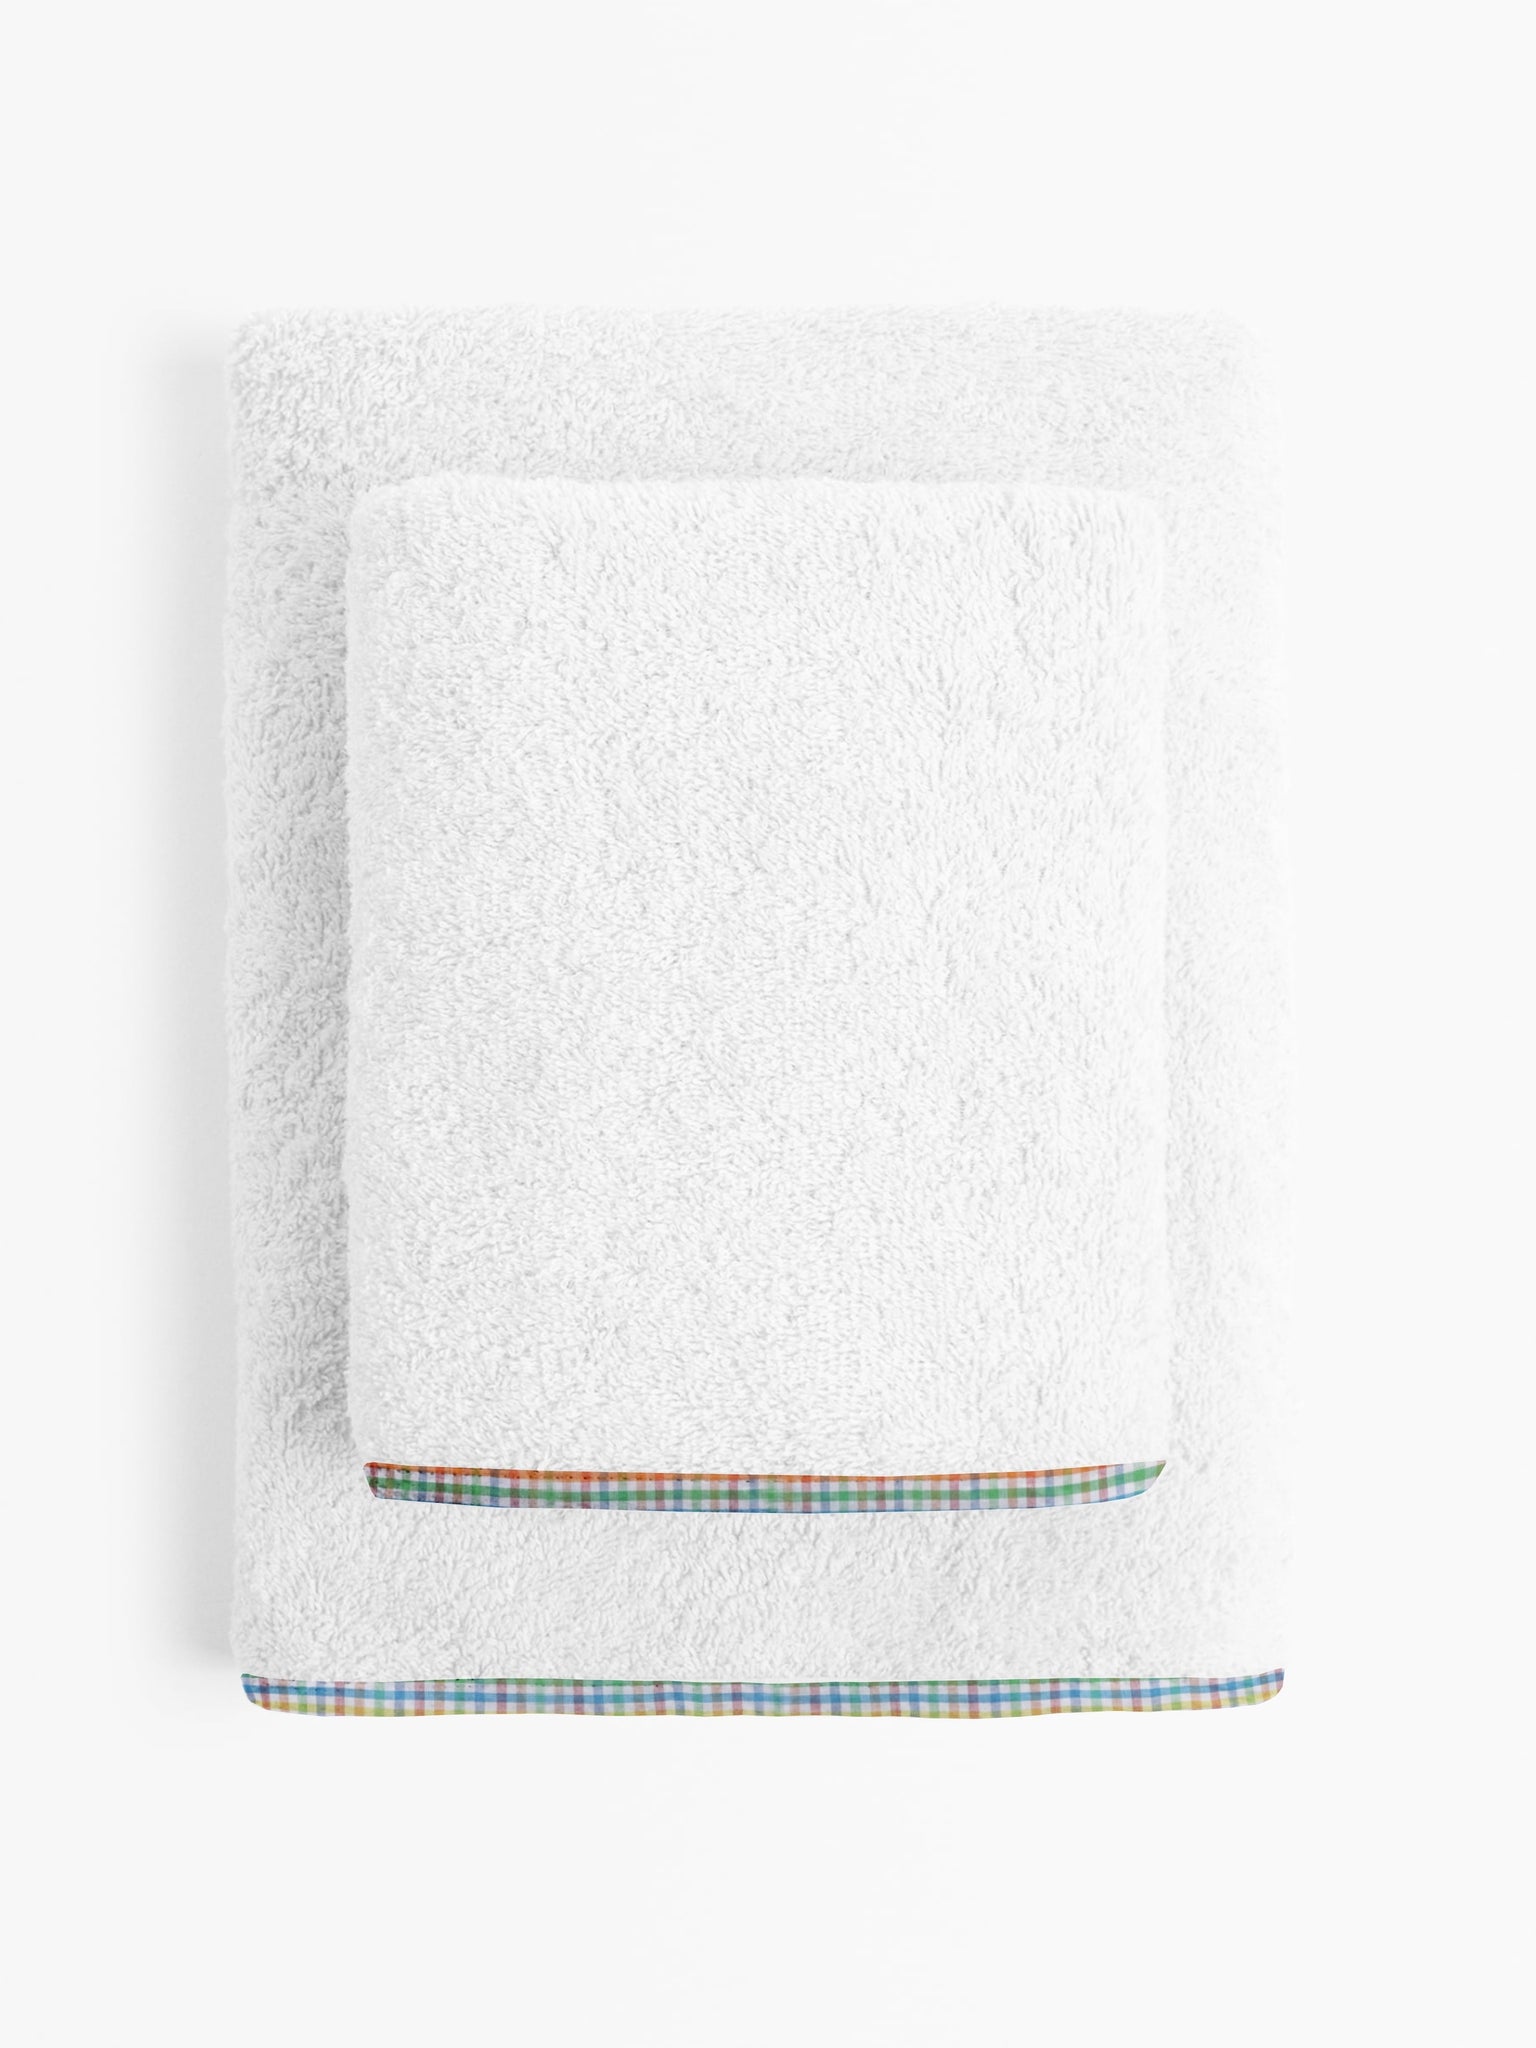 ‘Multi Checks’ Organic Junior Towel Set